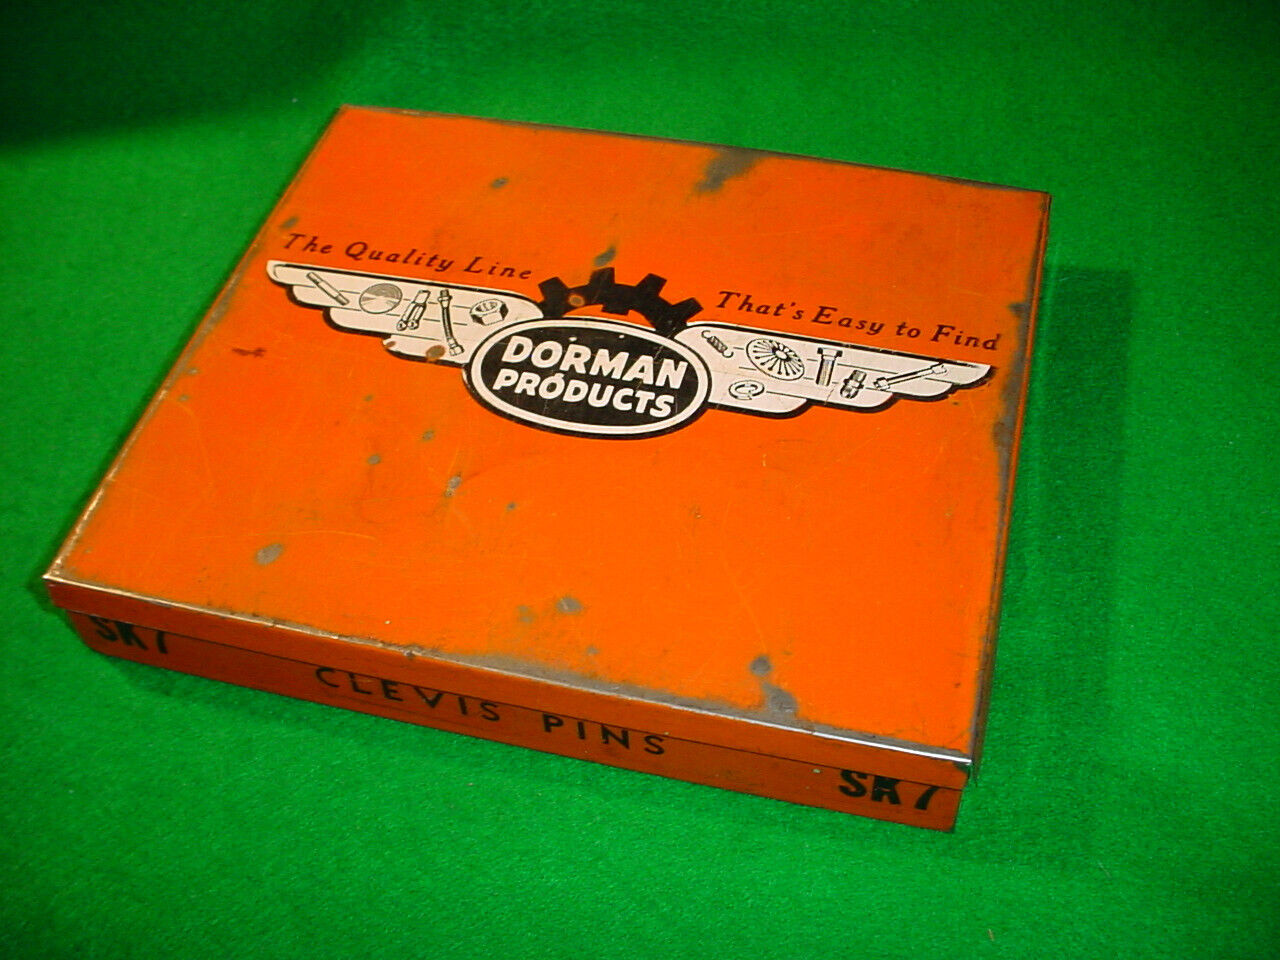 Vintage Dorman Products Tin Box, Clevis Pins